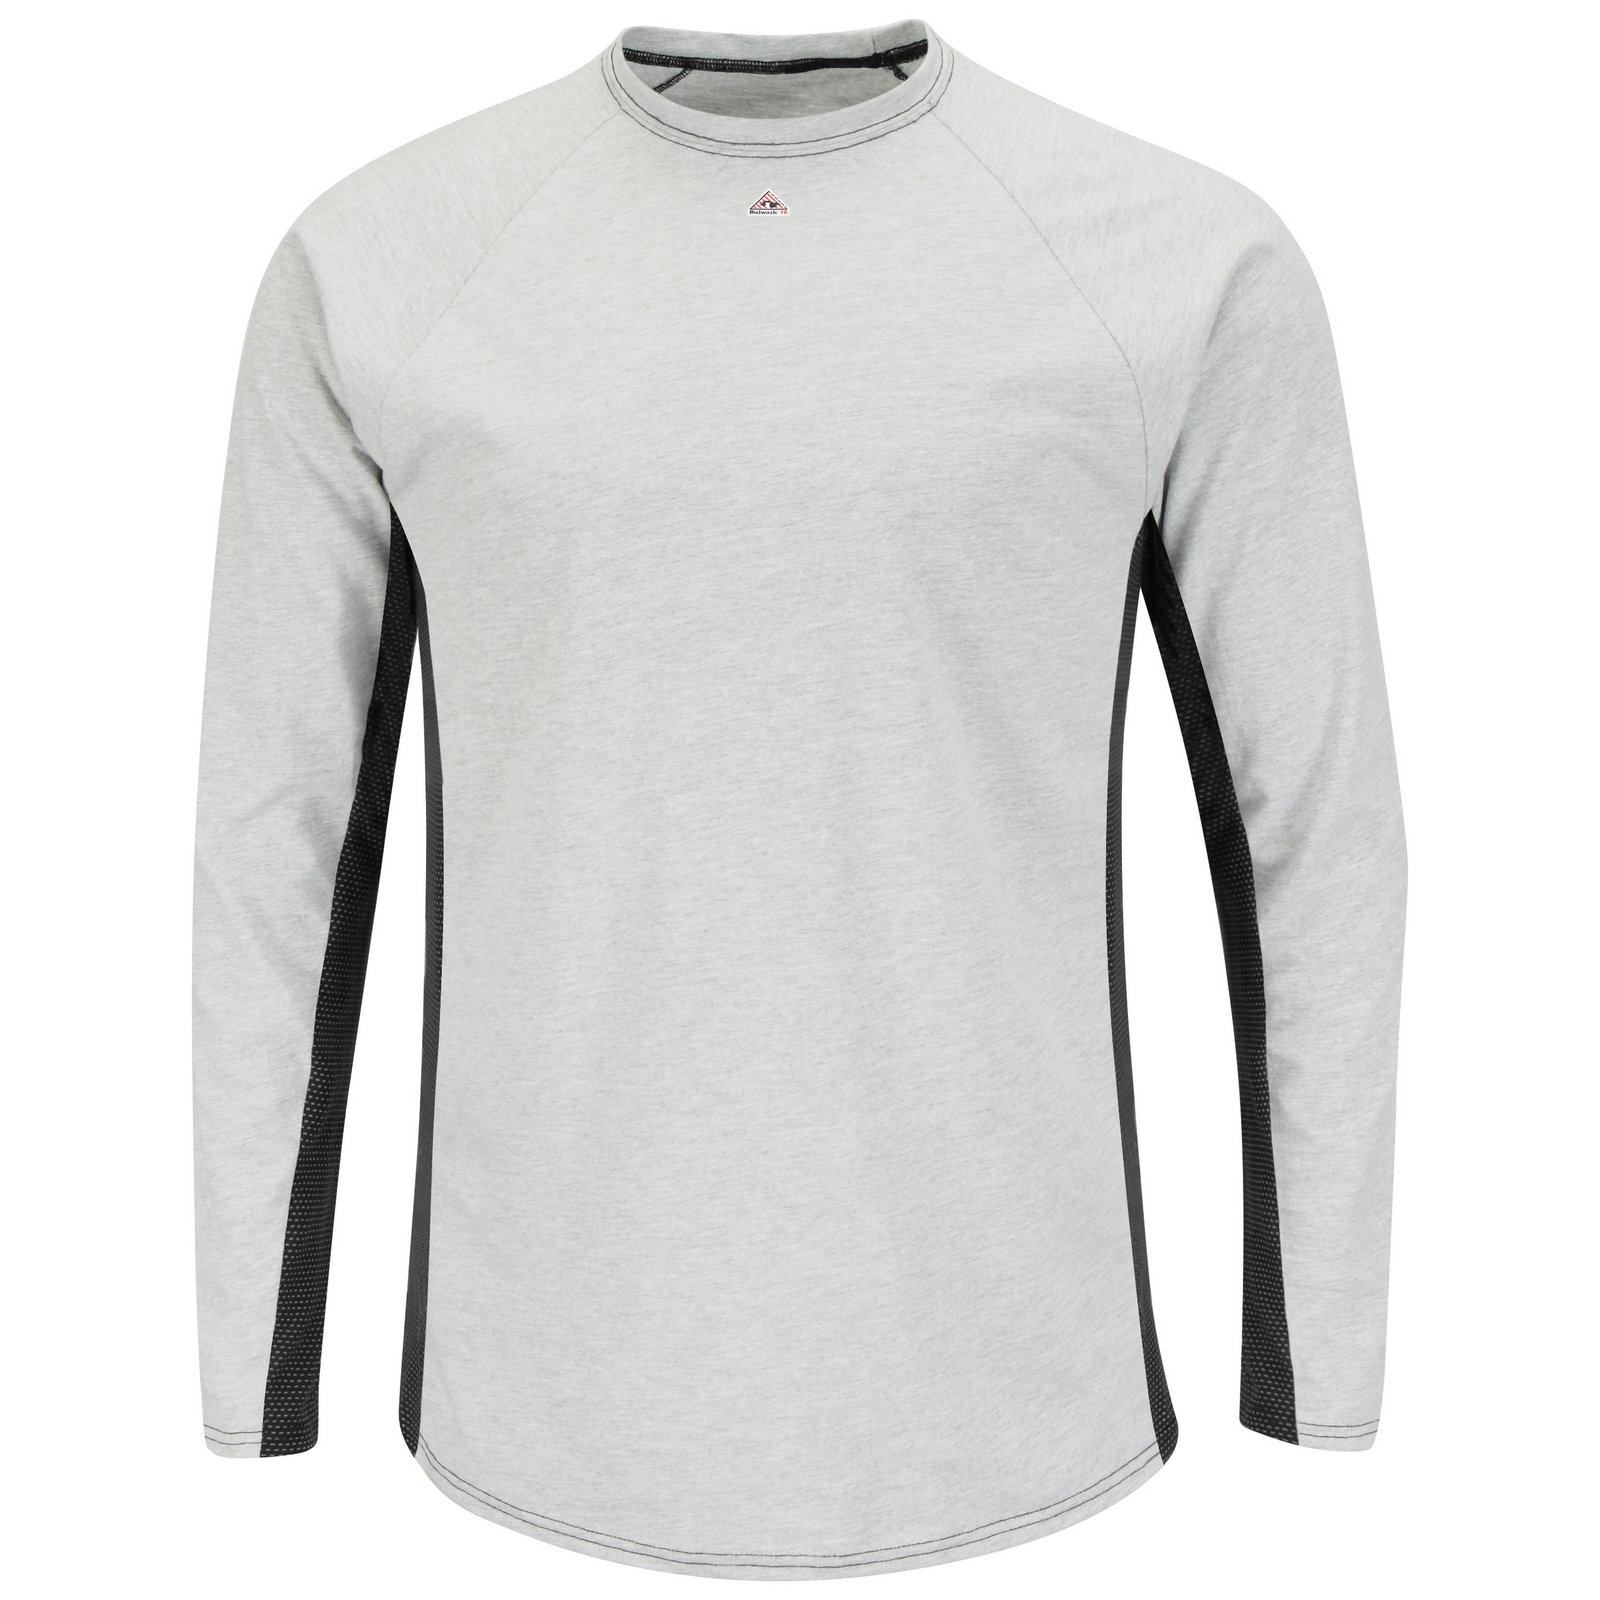 FR Two-Tone Long Sleeve Base Layer Shirt